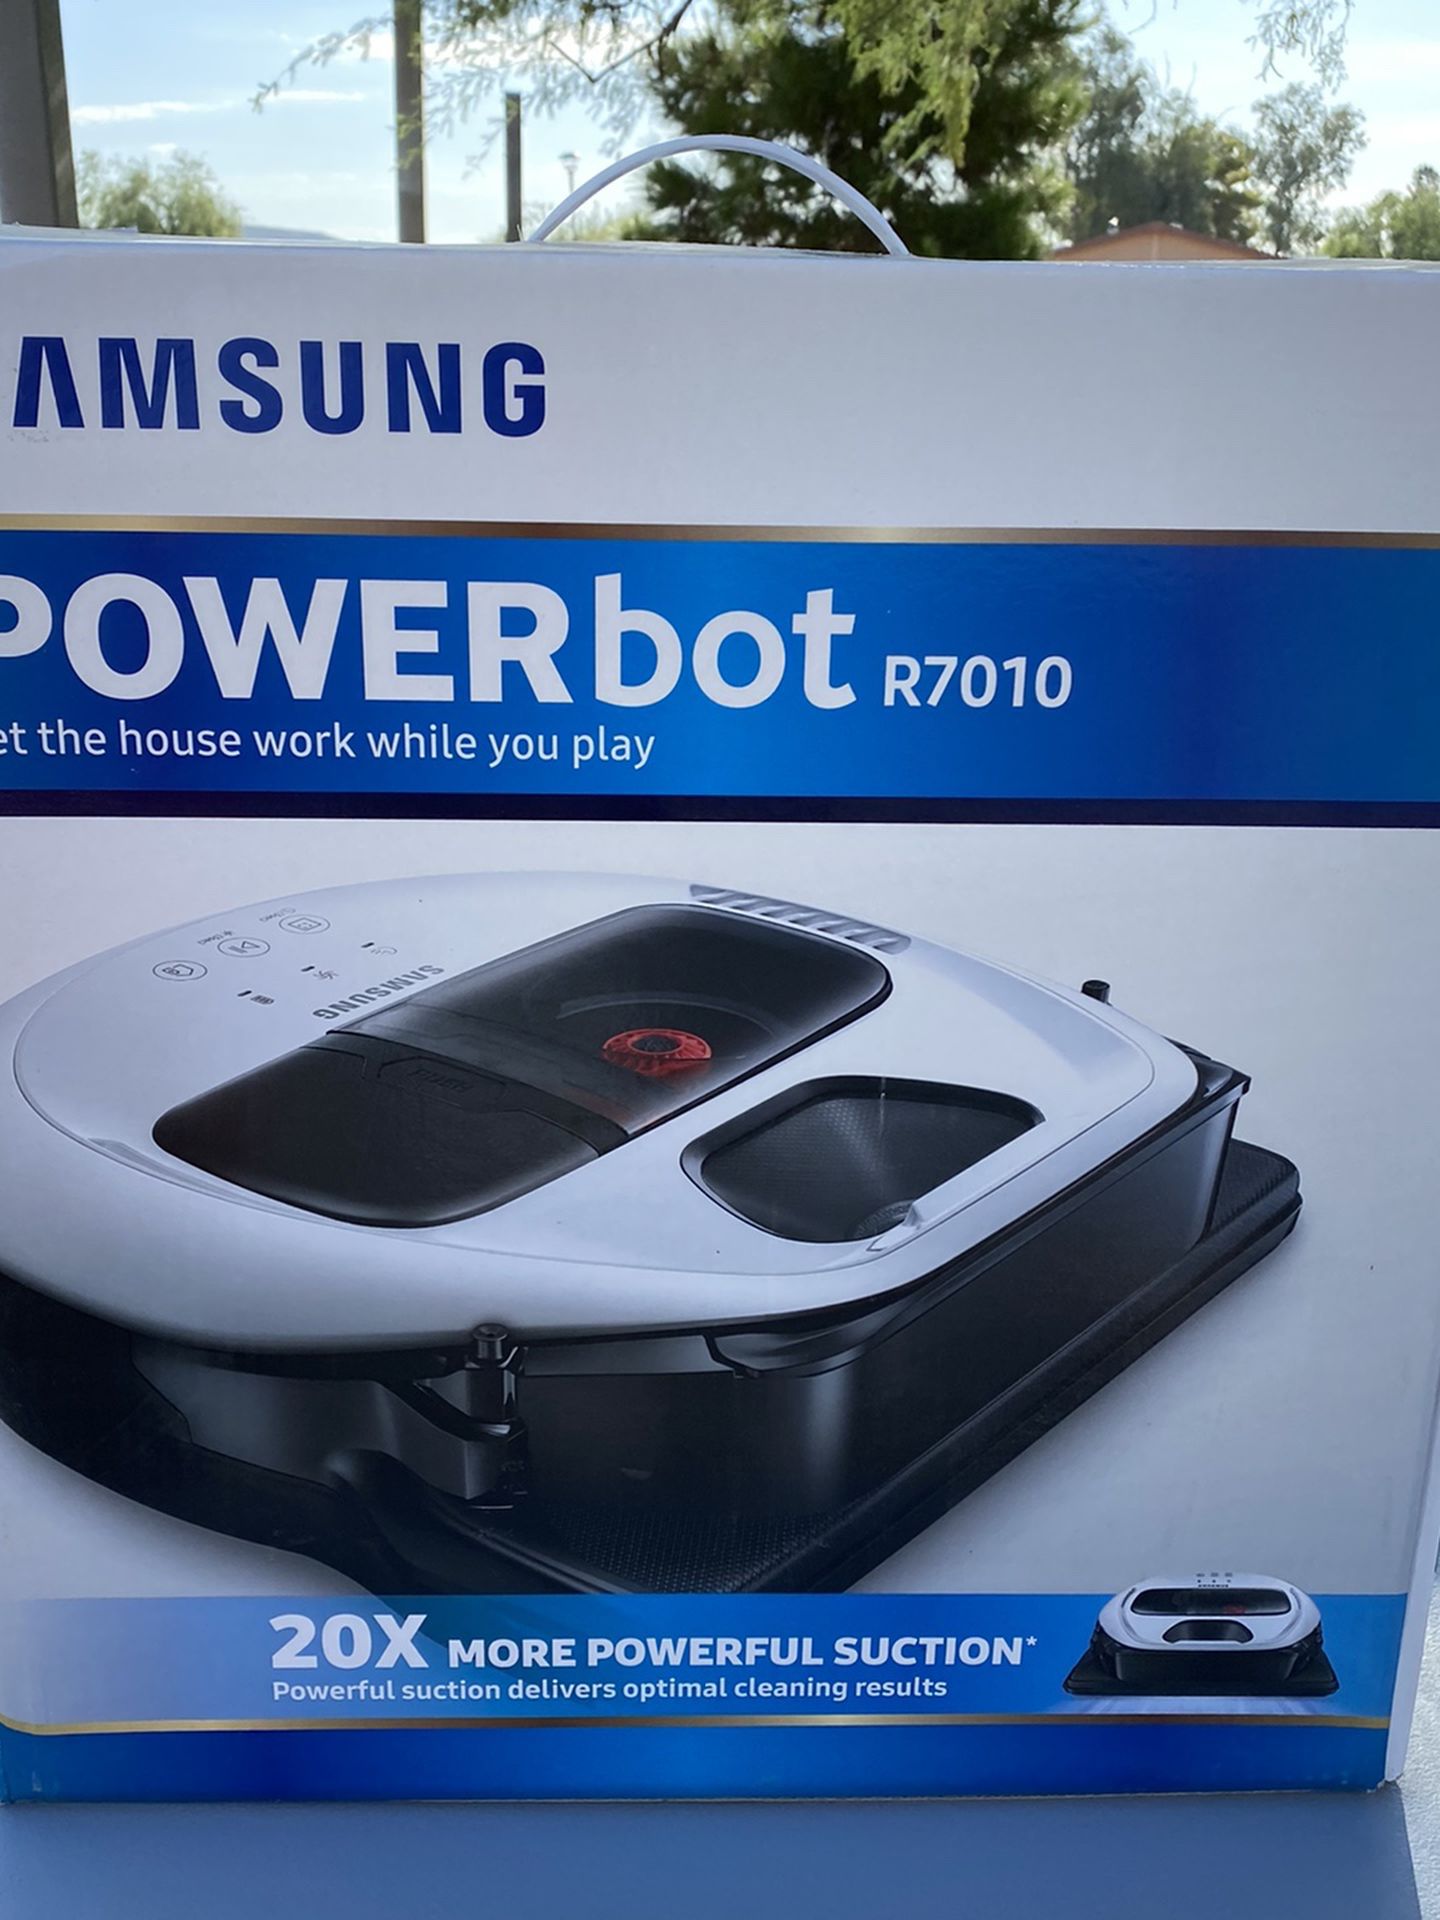 Samsung PowerBot